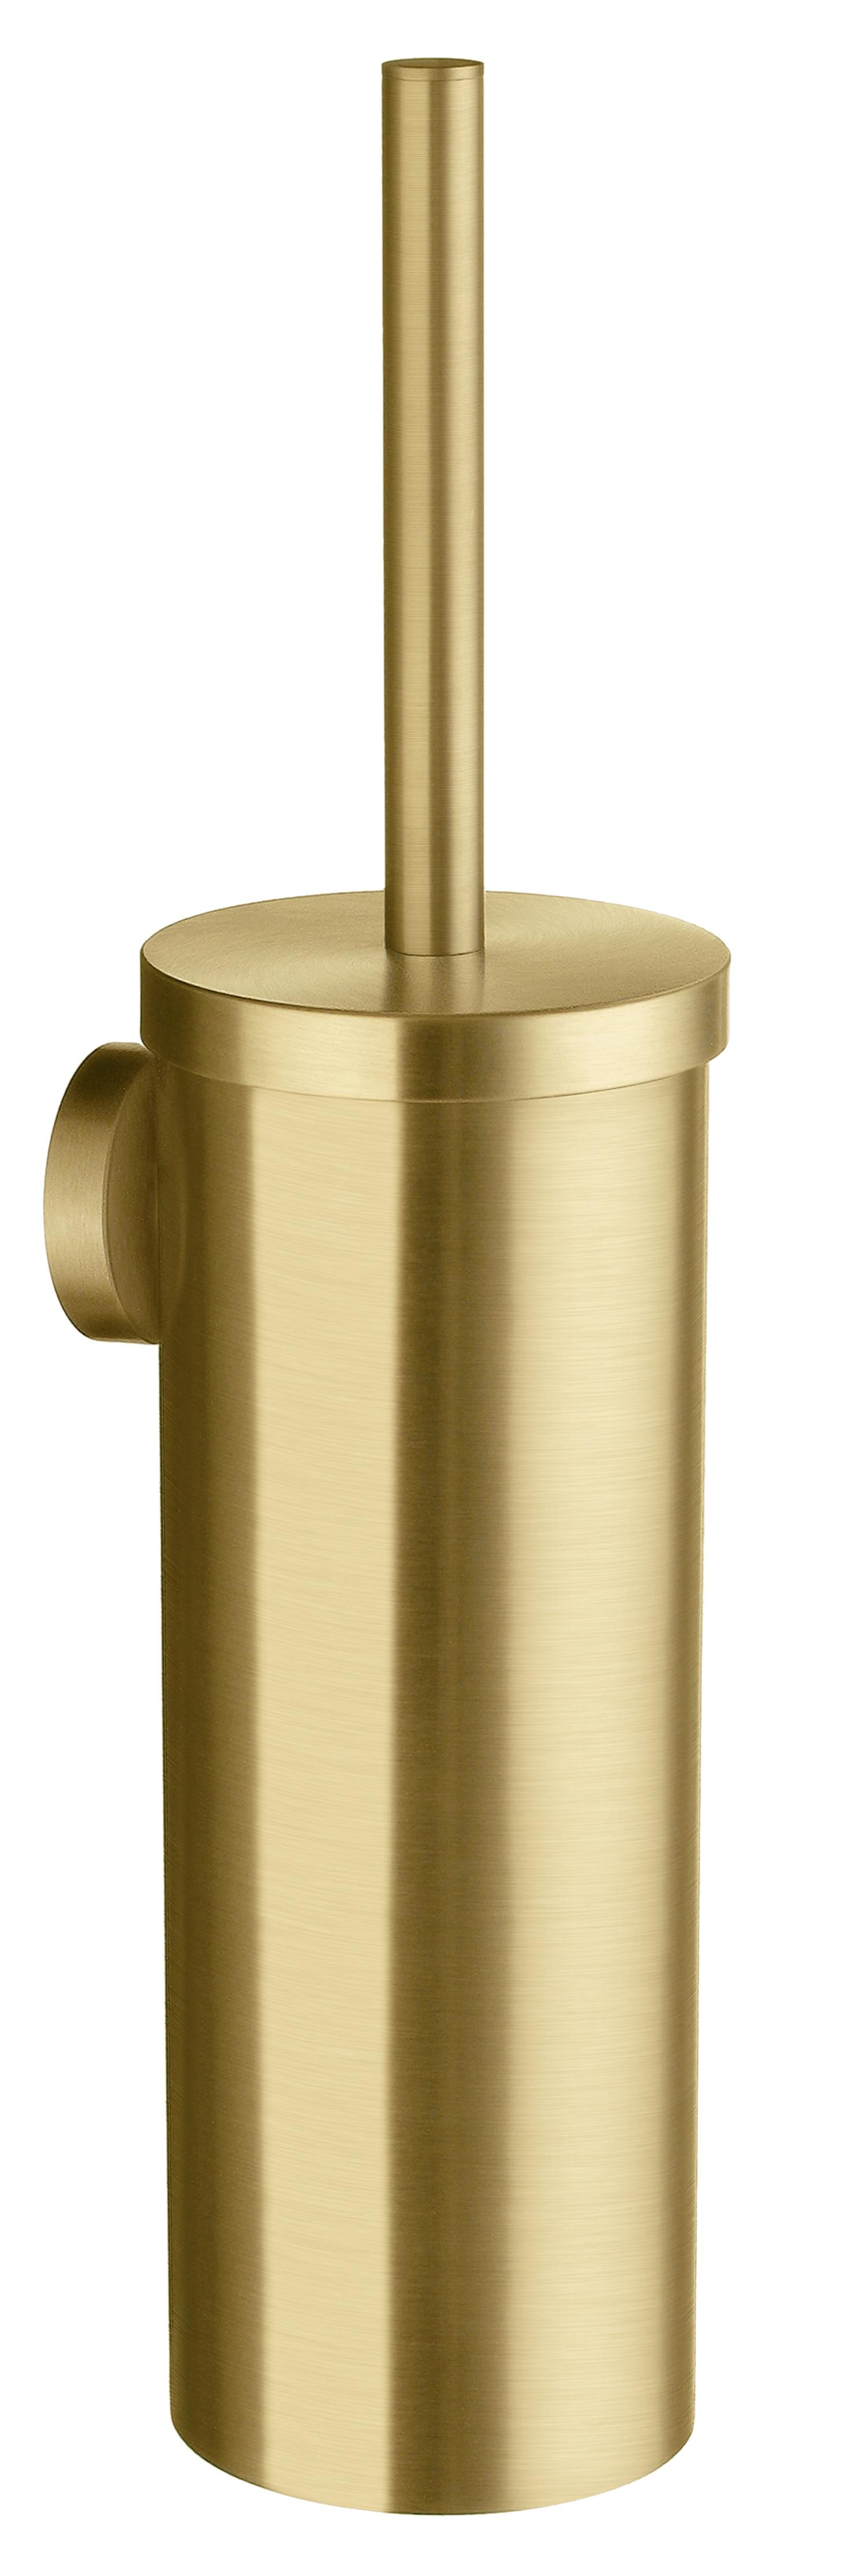 brushed brass toilet brush